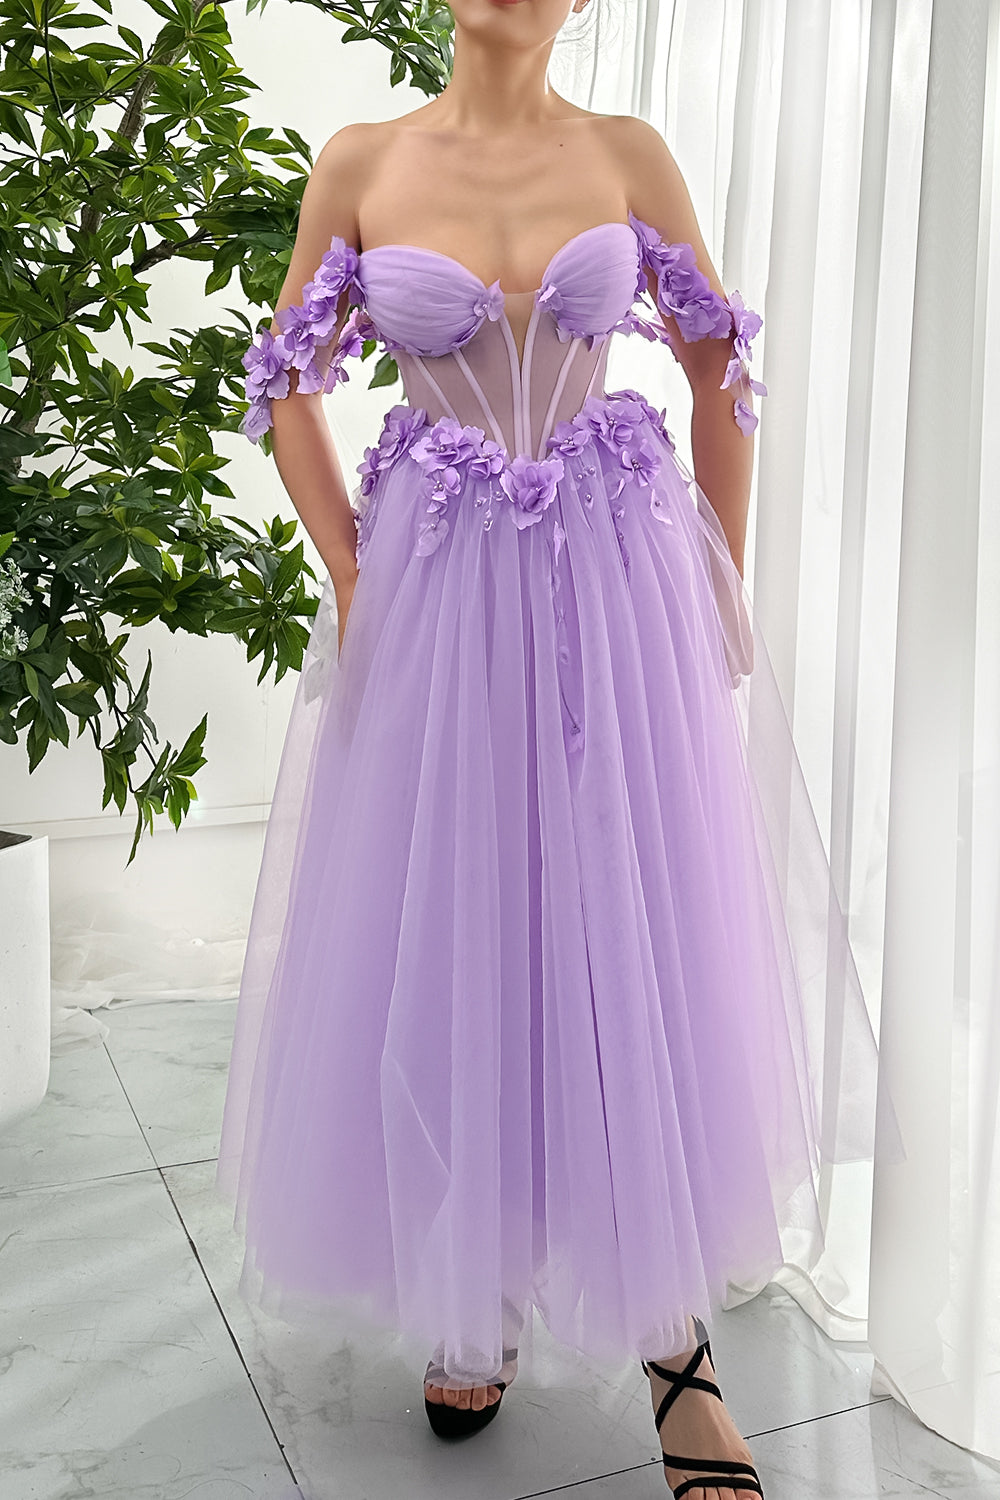 Corset 3D Floral Lavender Dress with Removable Off Shoulders